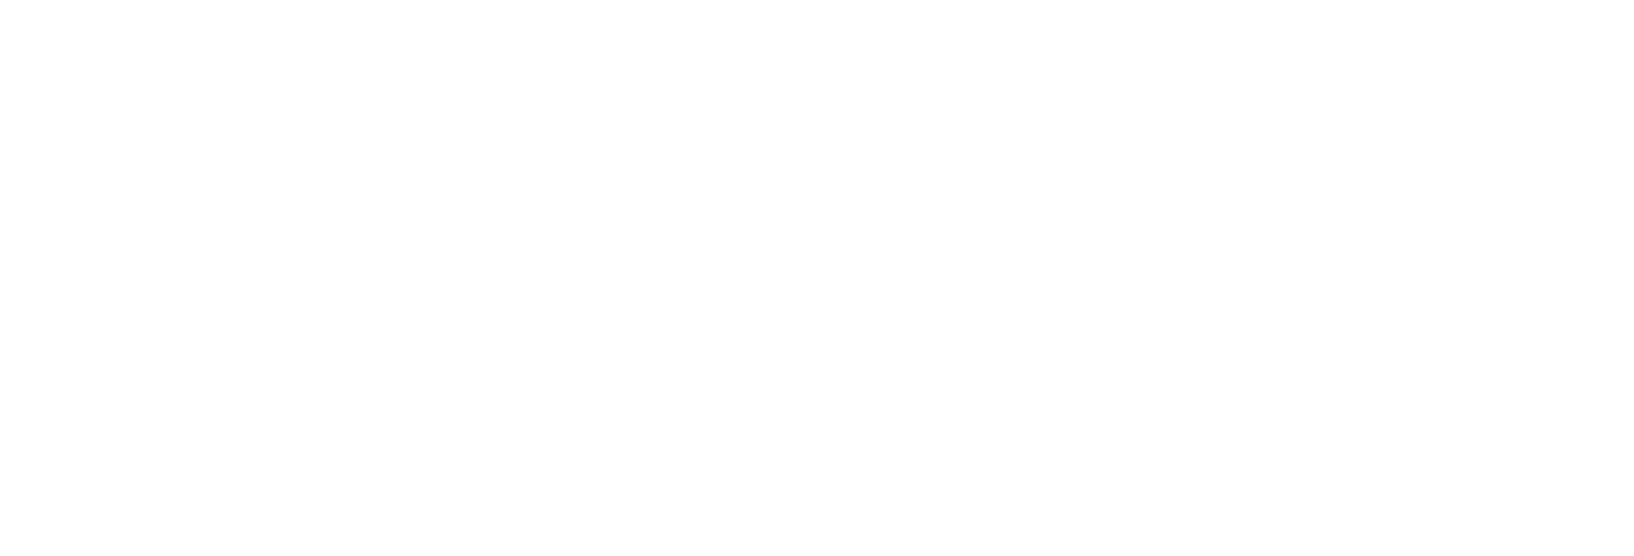 Slingshot Simulations White logo